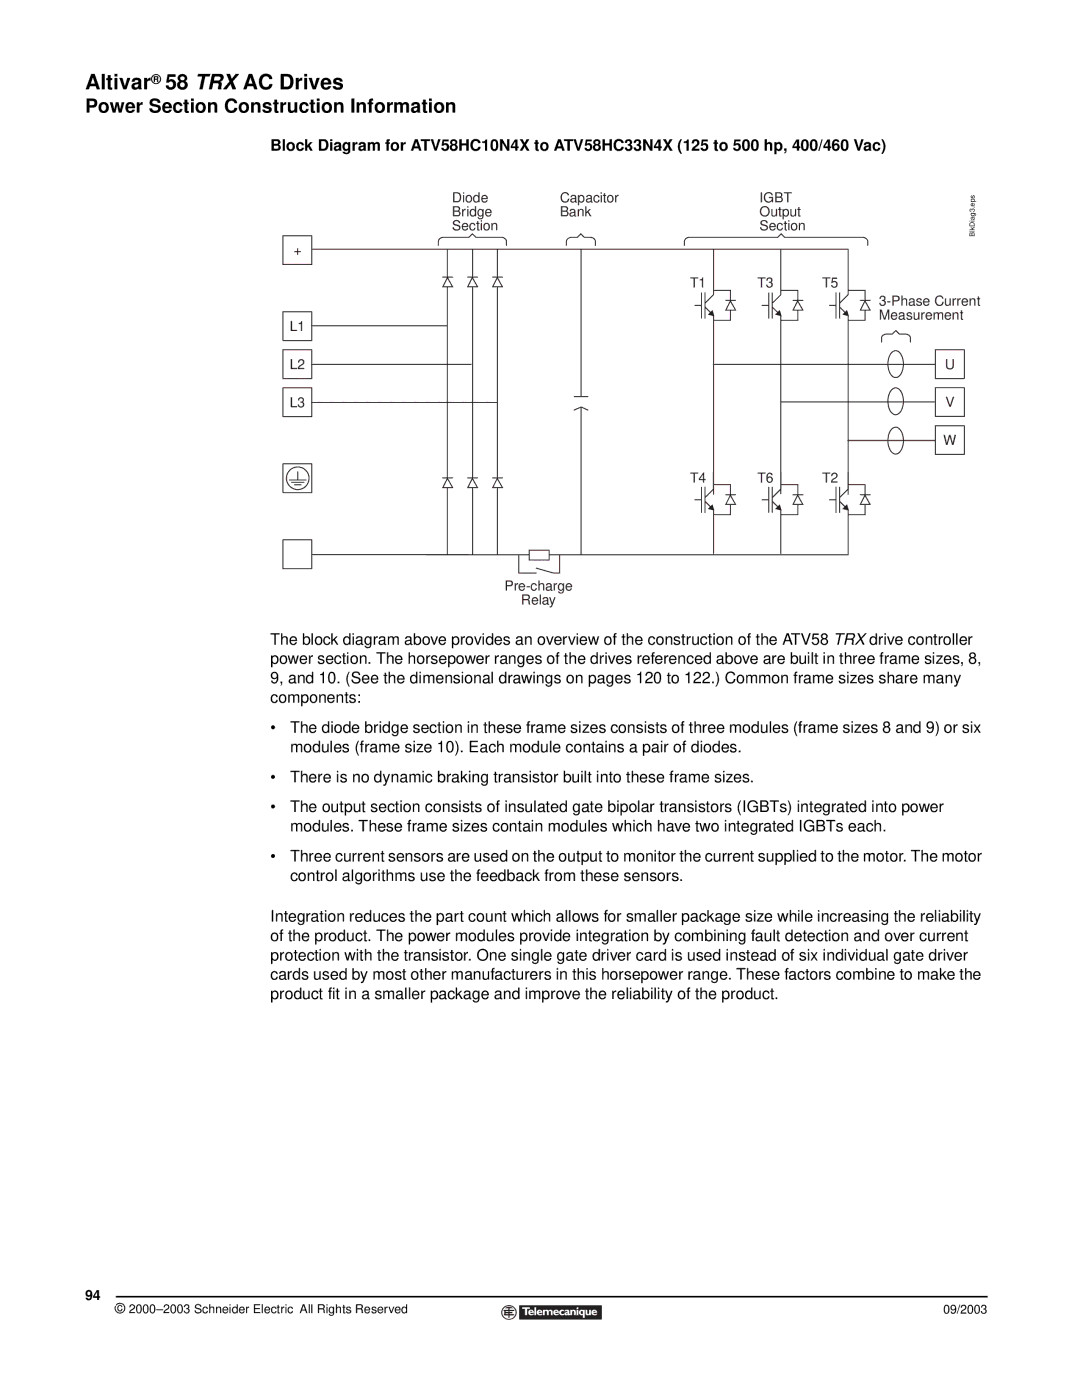 Schneider Electric 58 TRX manual Igbt 